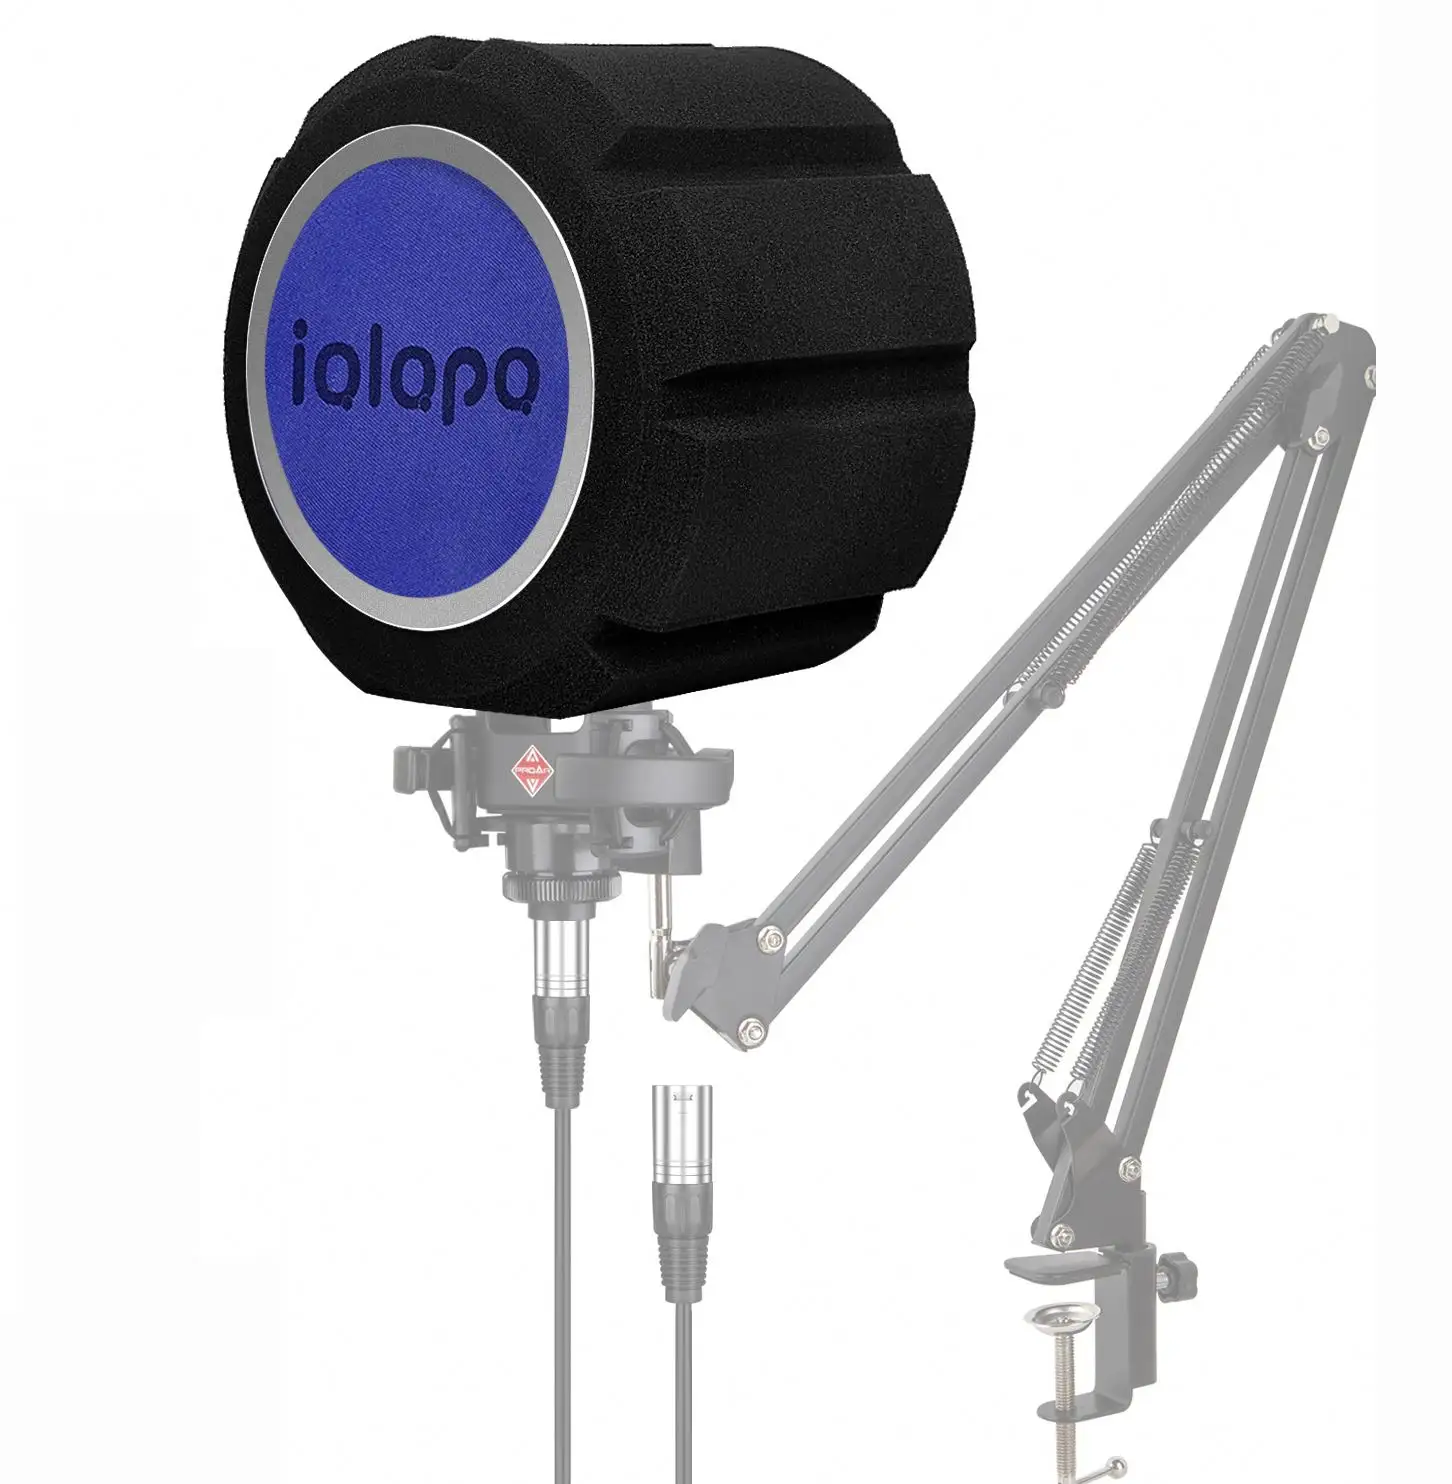 Kayıt ve şarkı köpük ve Metal Pop filtre gürültü azaltma için iQlQPQ GY-1 stüdyo mikrofonu cam akustik filtre